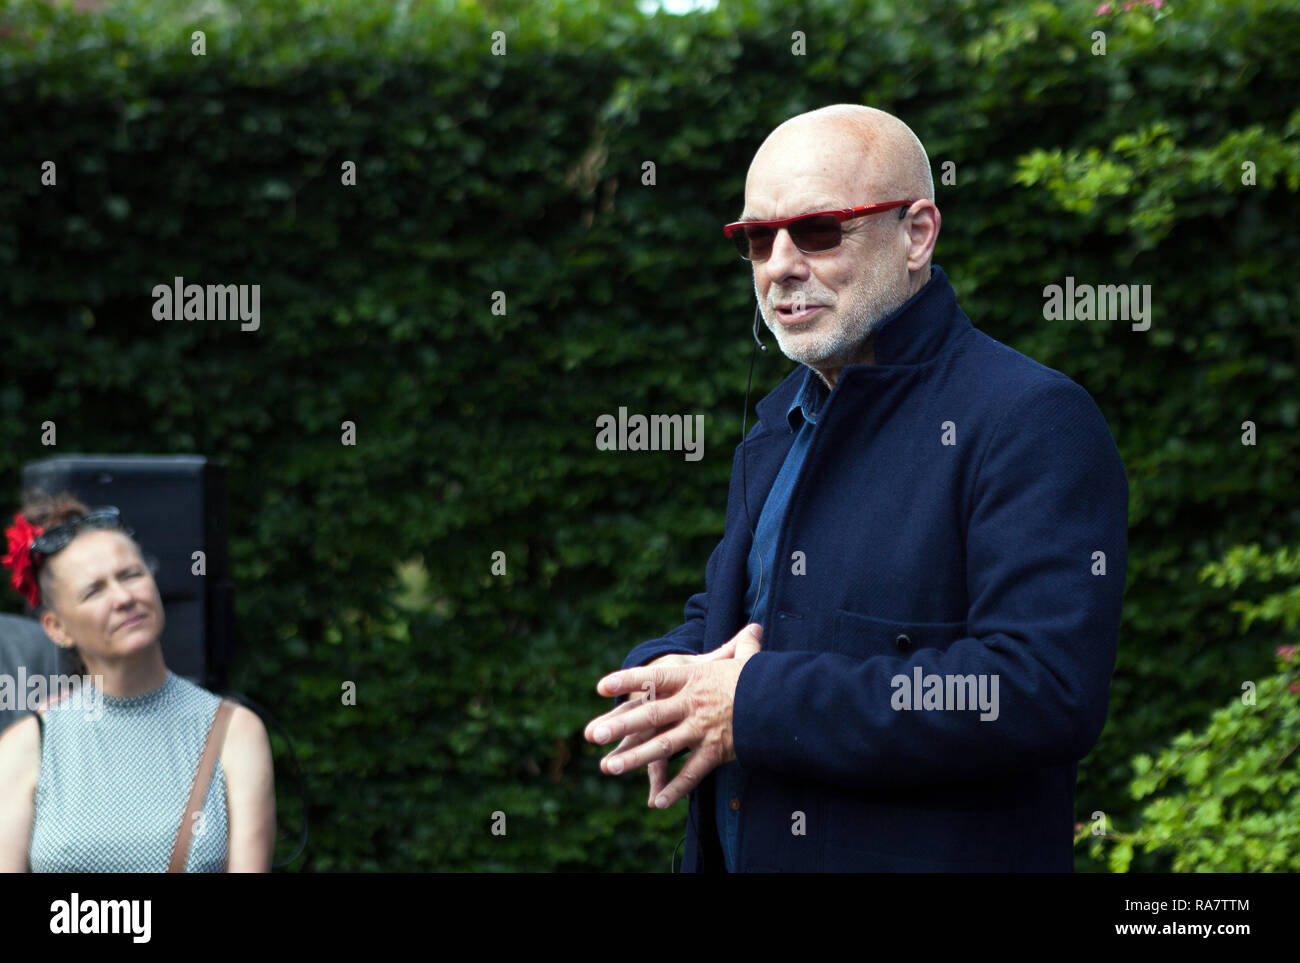 The English musician, artist, record producer and composer Brian Eno presents his art piece The Ship at the Danish music festival Heartland Festival 2016. Denmark, 10/06 2016. EXCLUDING DENMARK Stock Photo